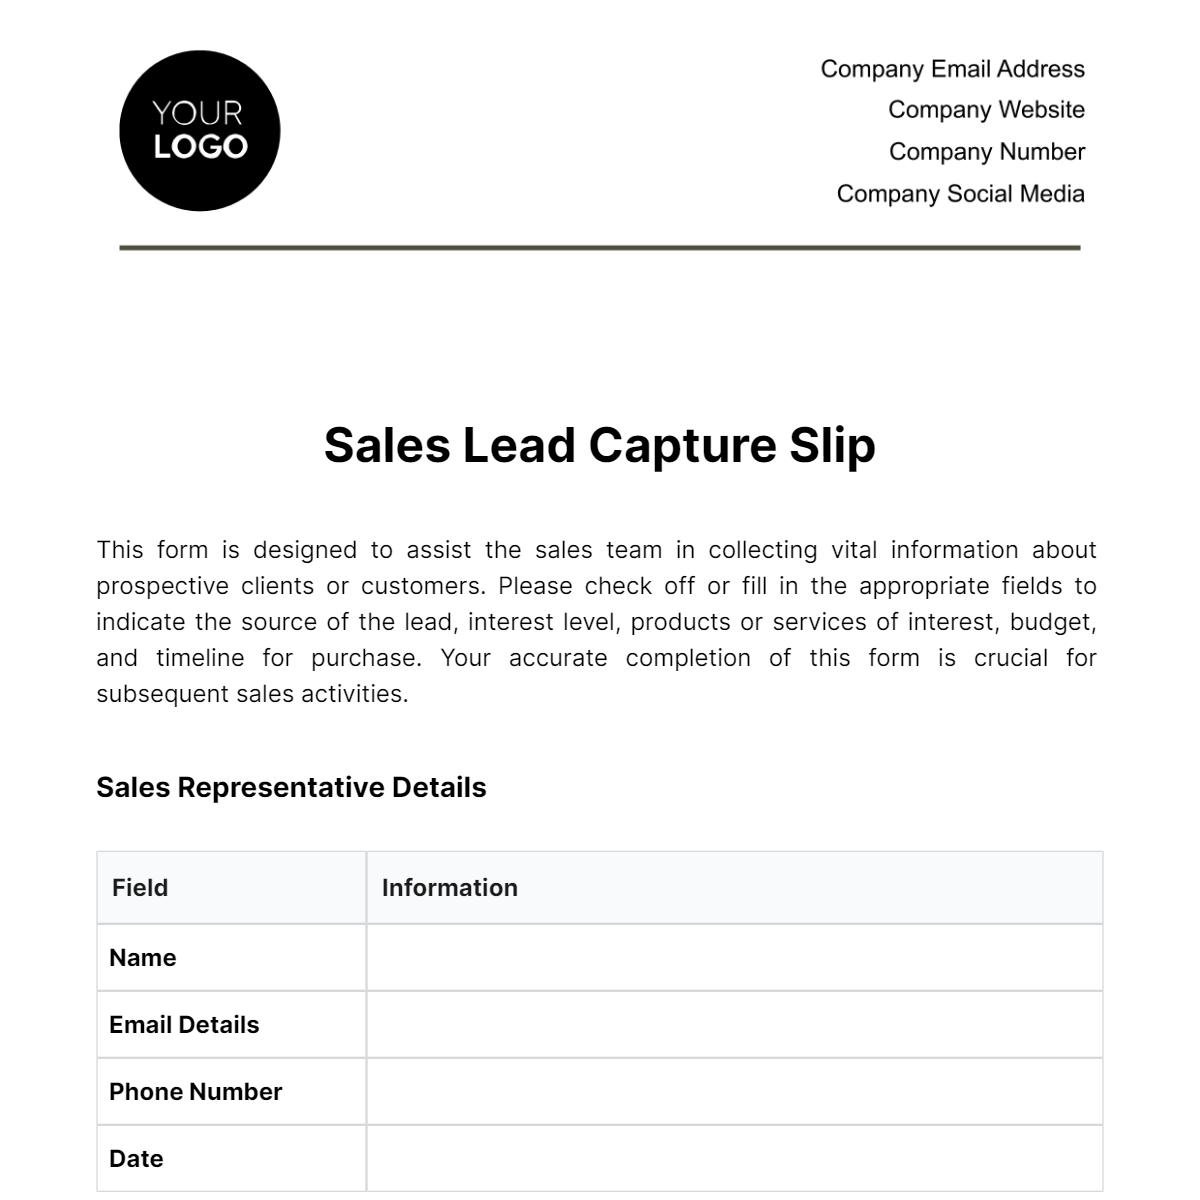 Sales Lead Capture Slip Template